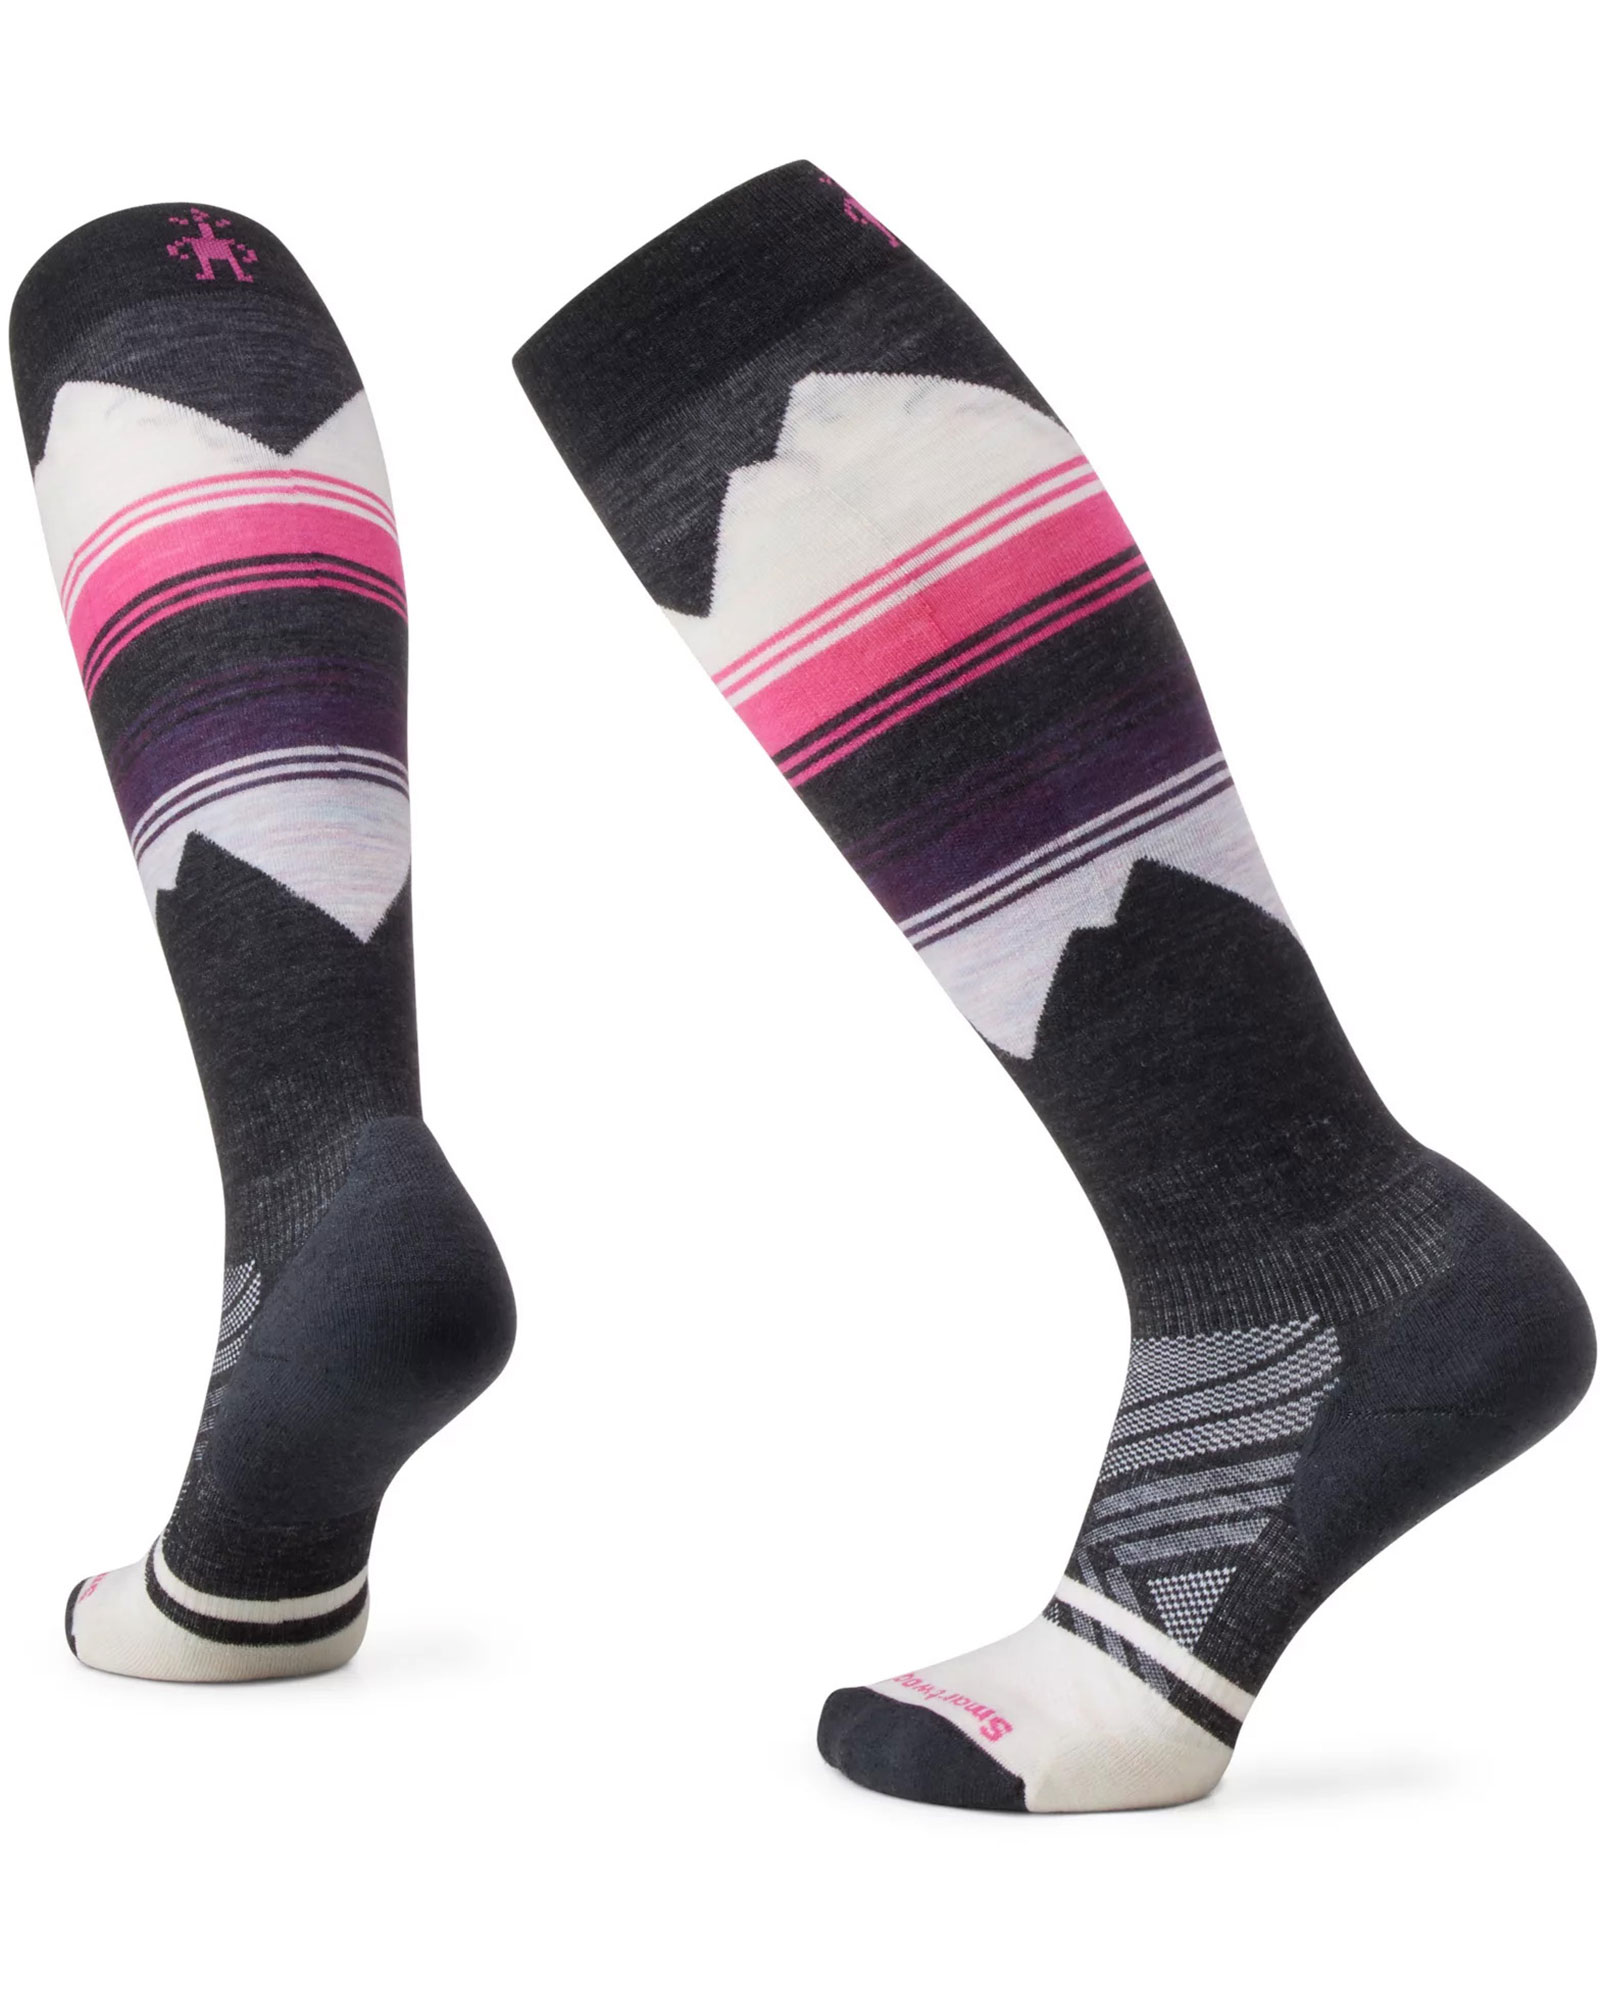 Smartwool Targeted Cushion Women’s Ski Socks - Charcoal/Pink S